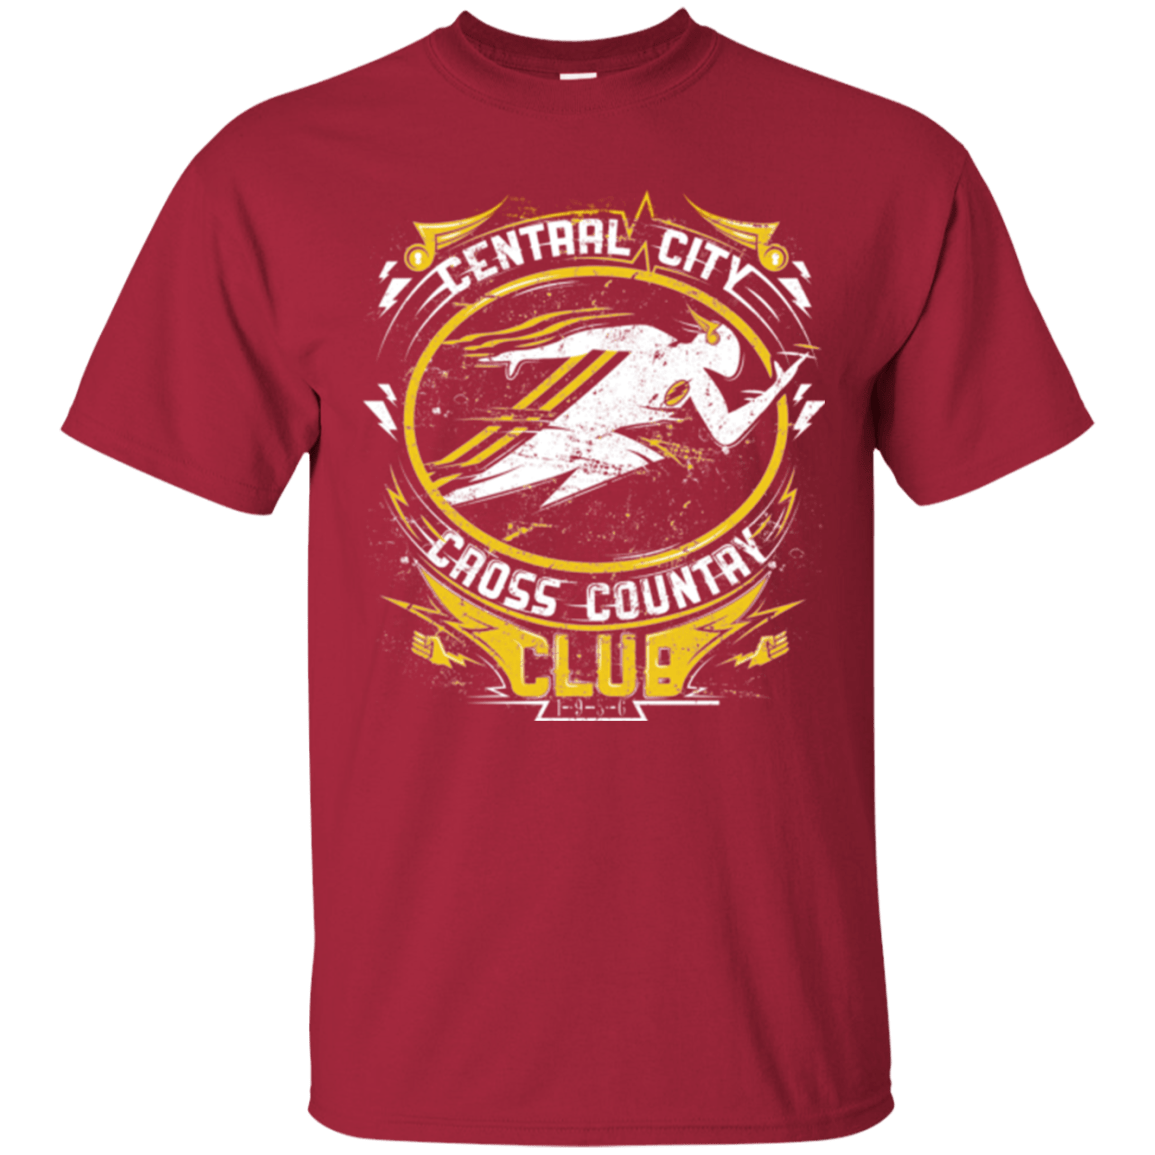 T-Shirts Cardinal / Small Cross Country Club T-Shirt